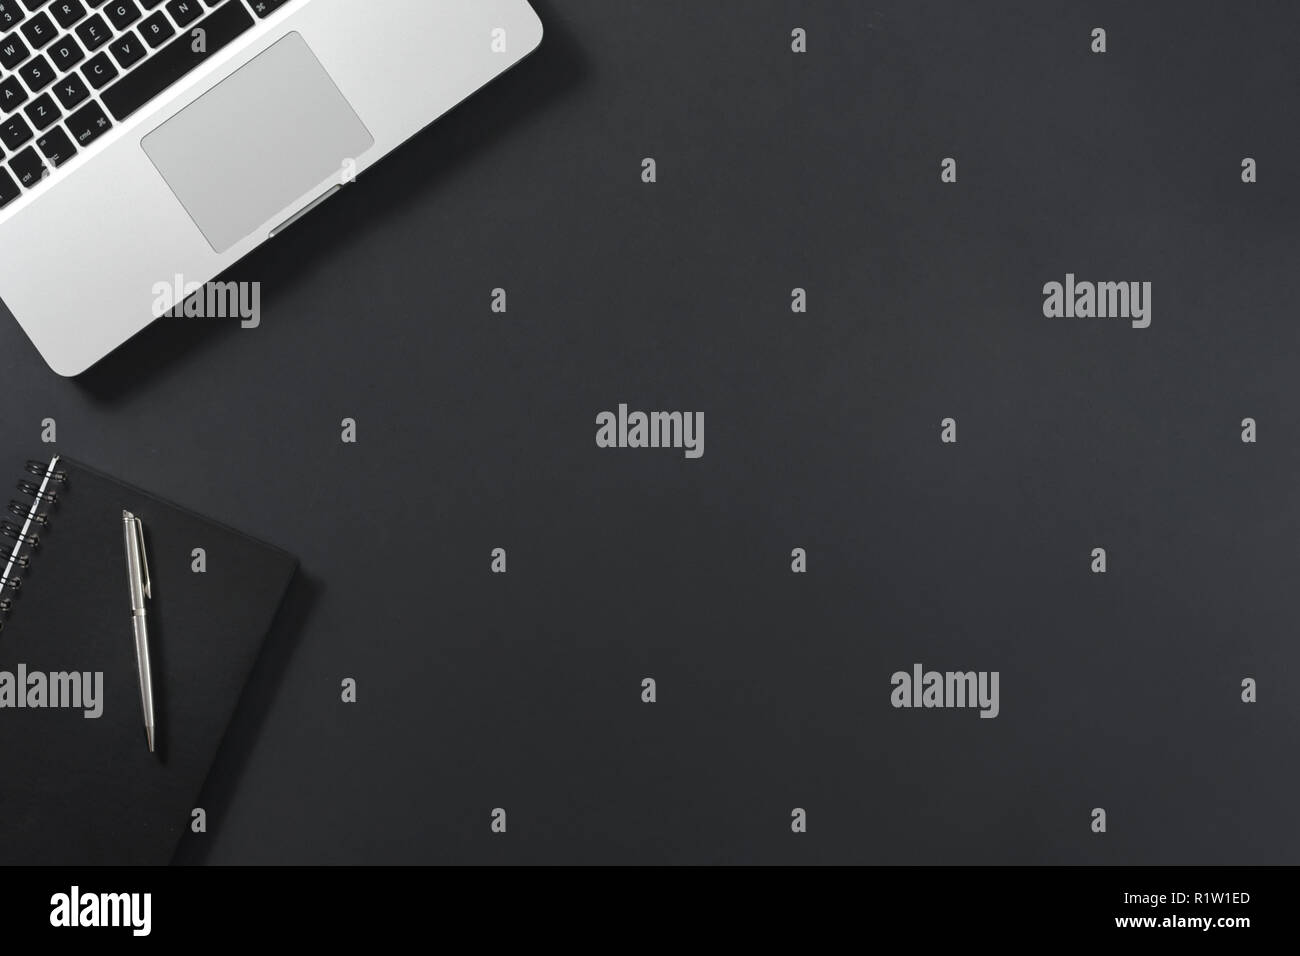 Laptop on black background copyspace textspace socialmedia Stock Photo